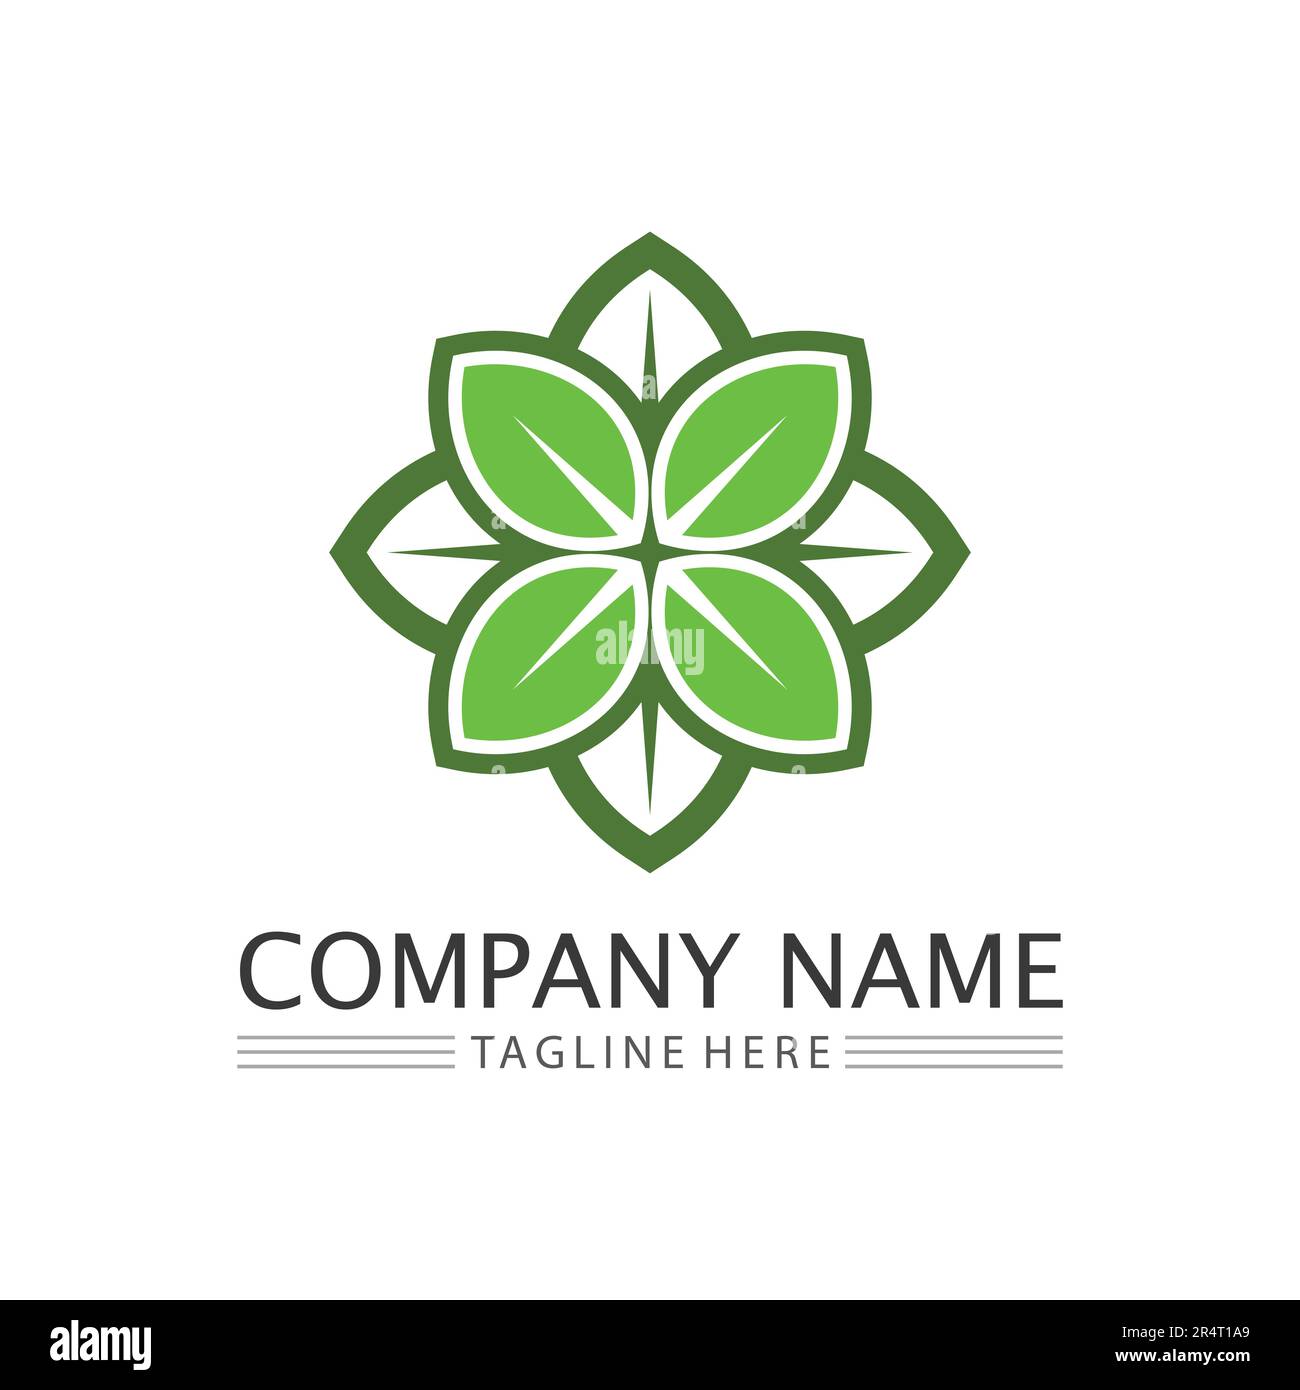 leaf logo design vector for nature symbol template editable,Green leaf logo ecology nature element vector icon. Stock Vector